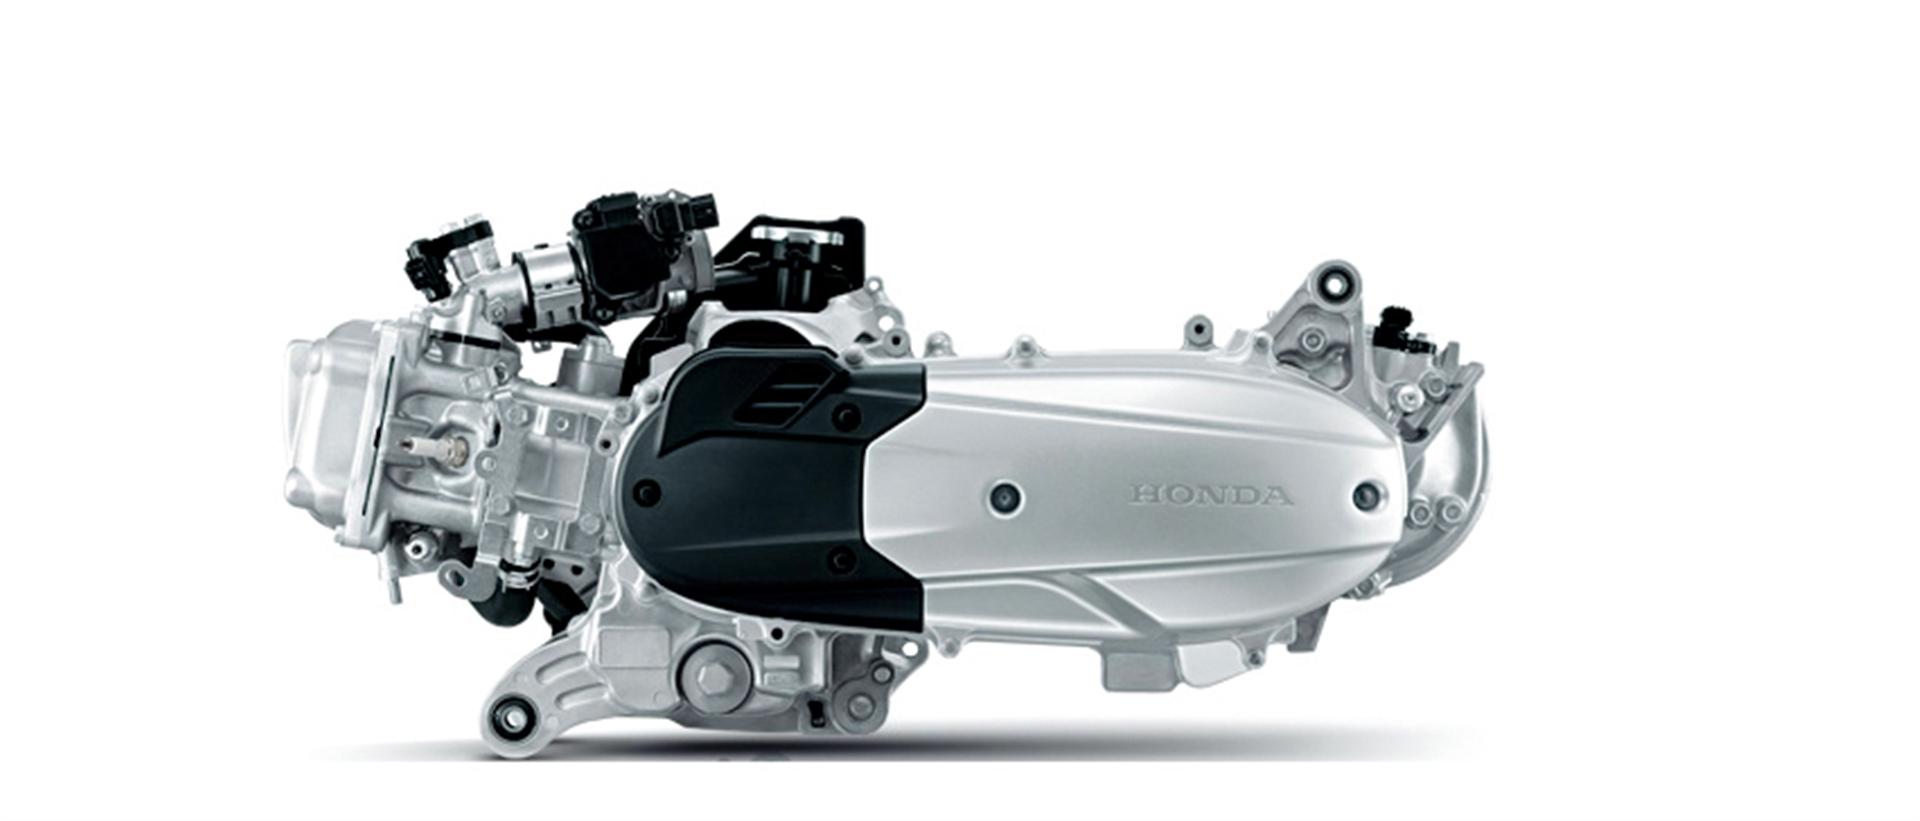 Инжектор на скутер. Двигатель скутера Хонда 250. Моторы Honda 250 кубов скутера. Двигатель на скутер 250 кубов. Двигатель скутера Хонда 150.